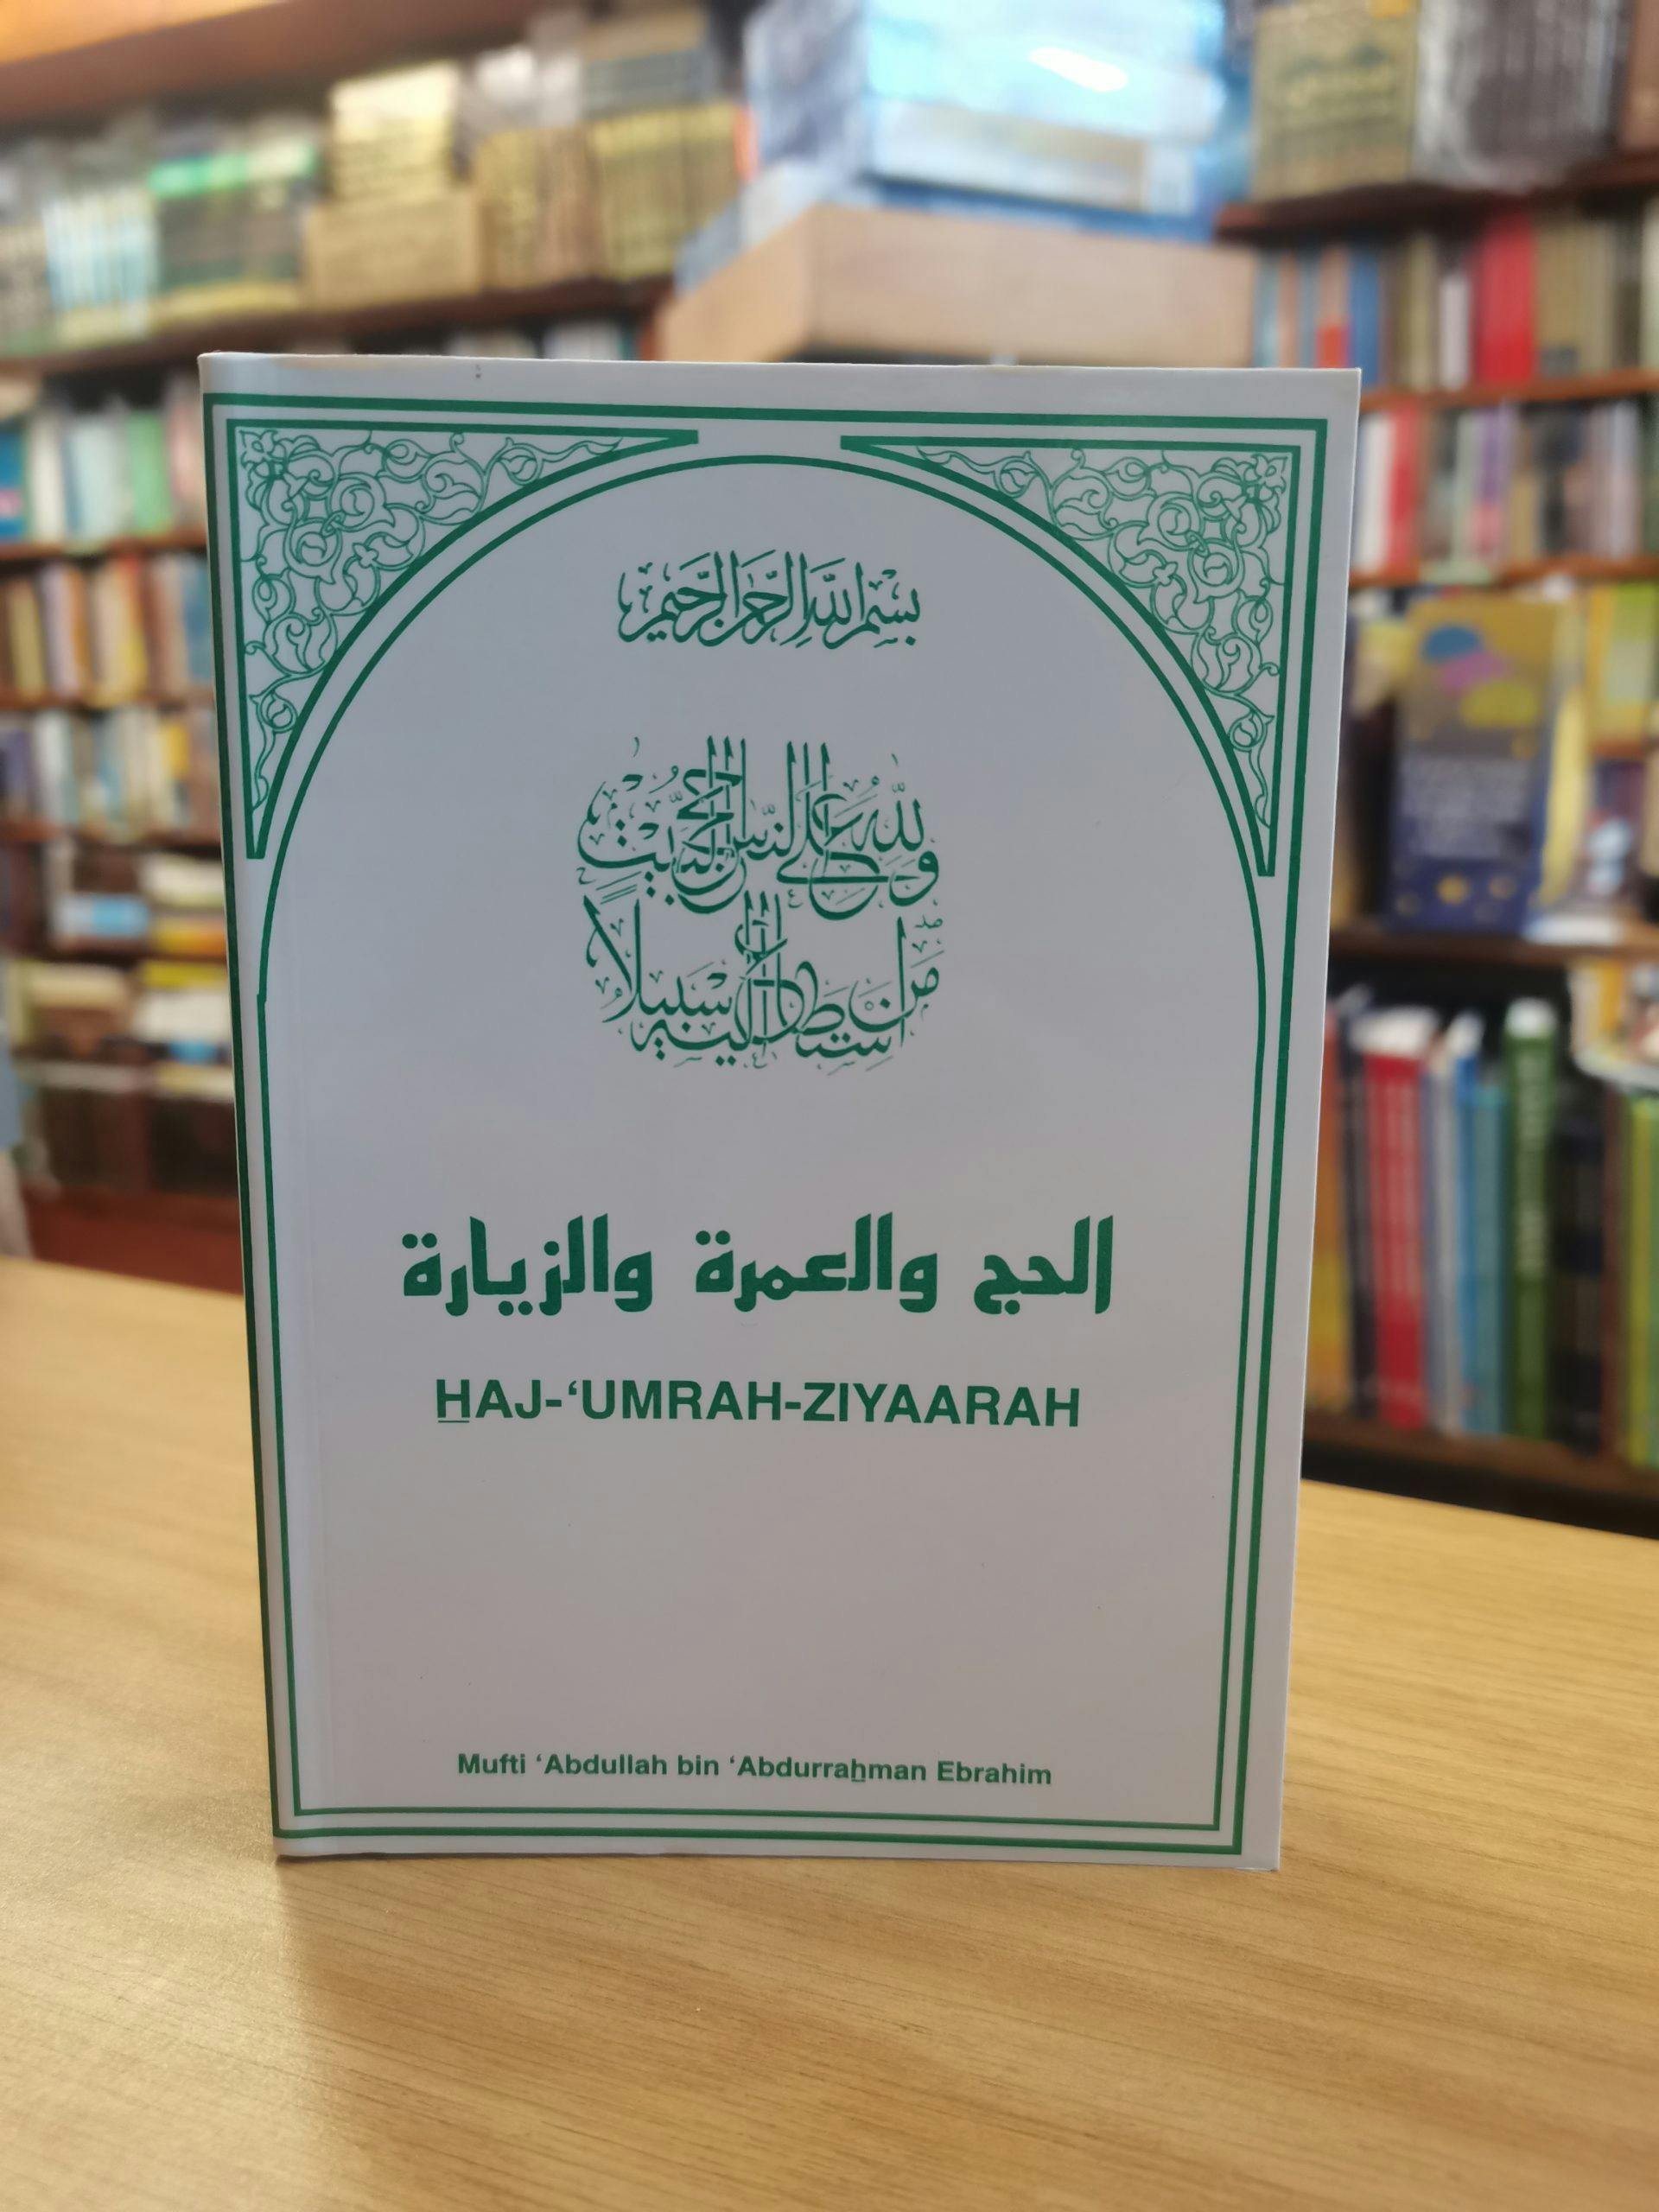 Featured image of Haj-Umrah-Ziyaarah